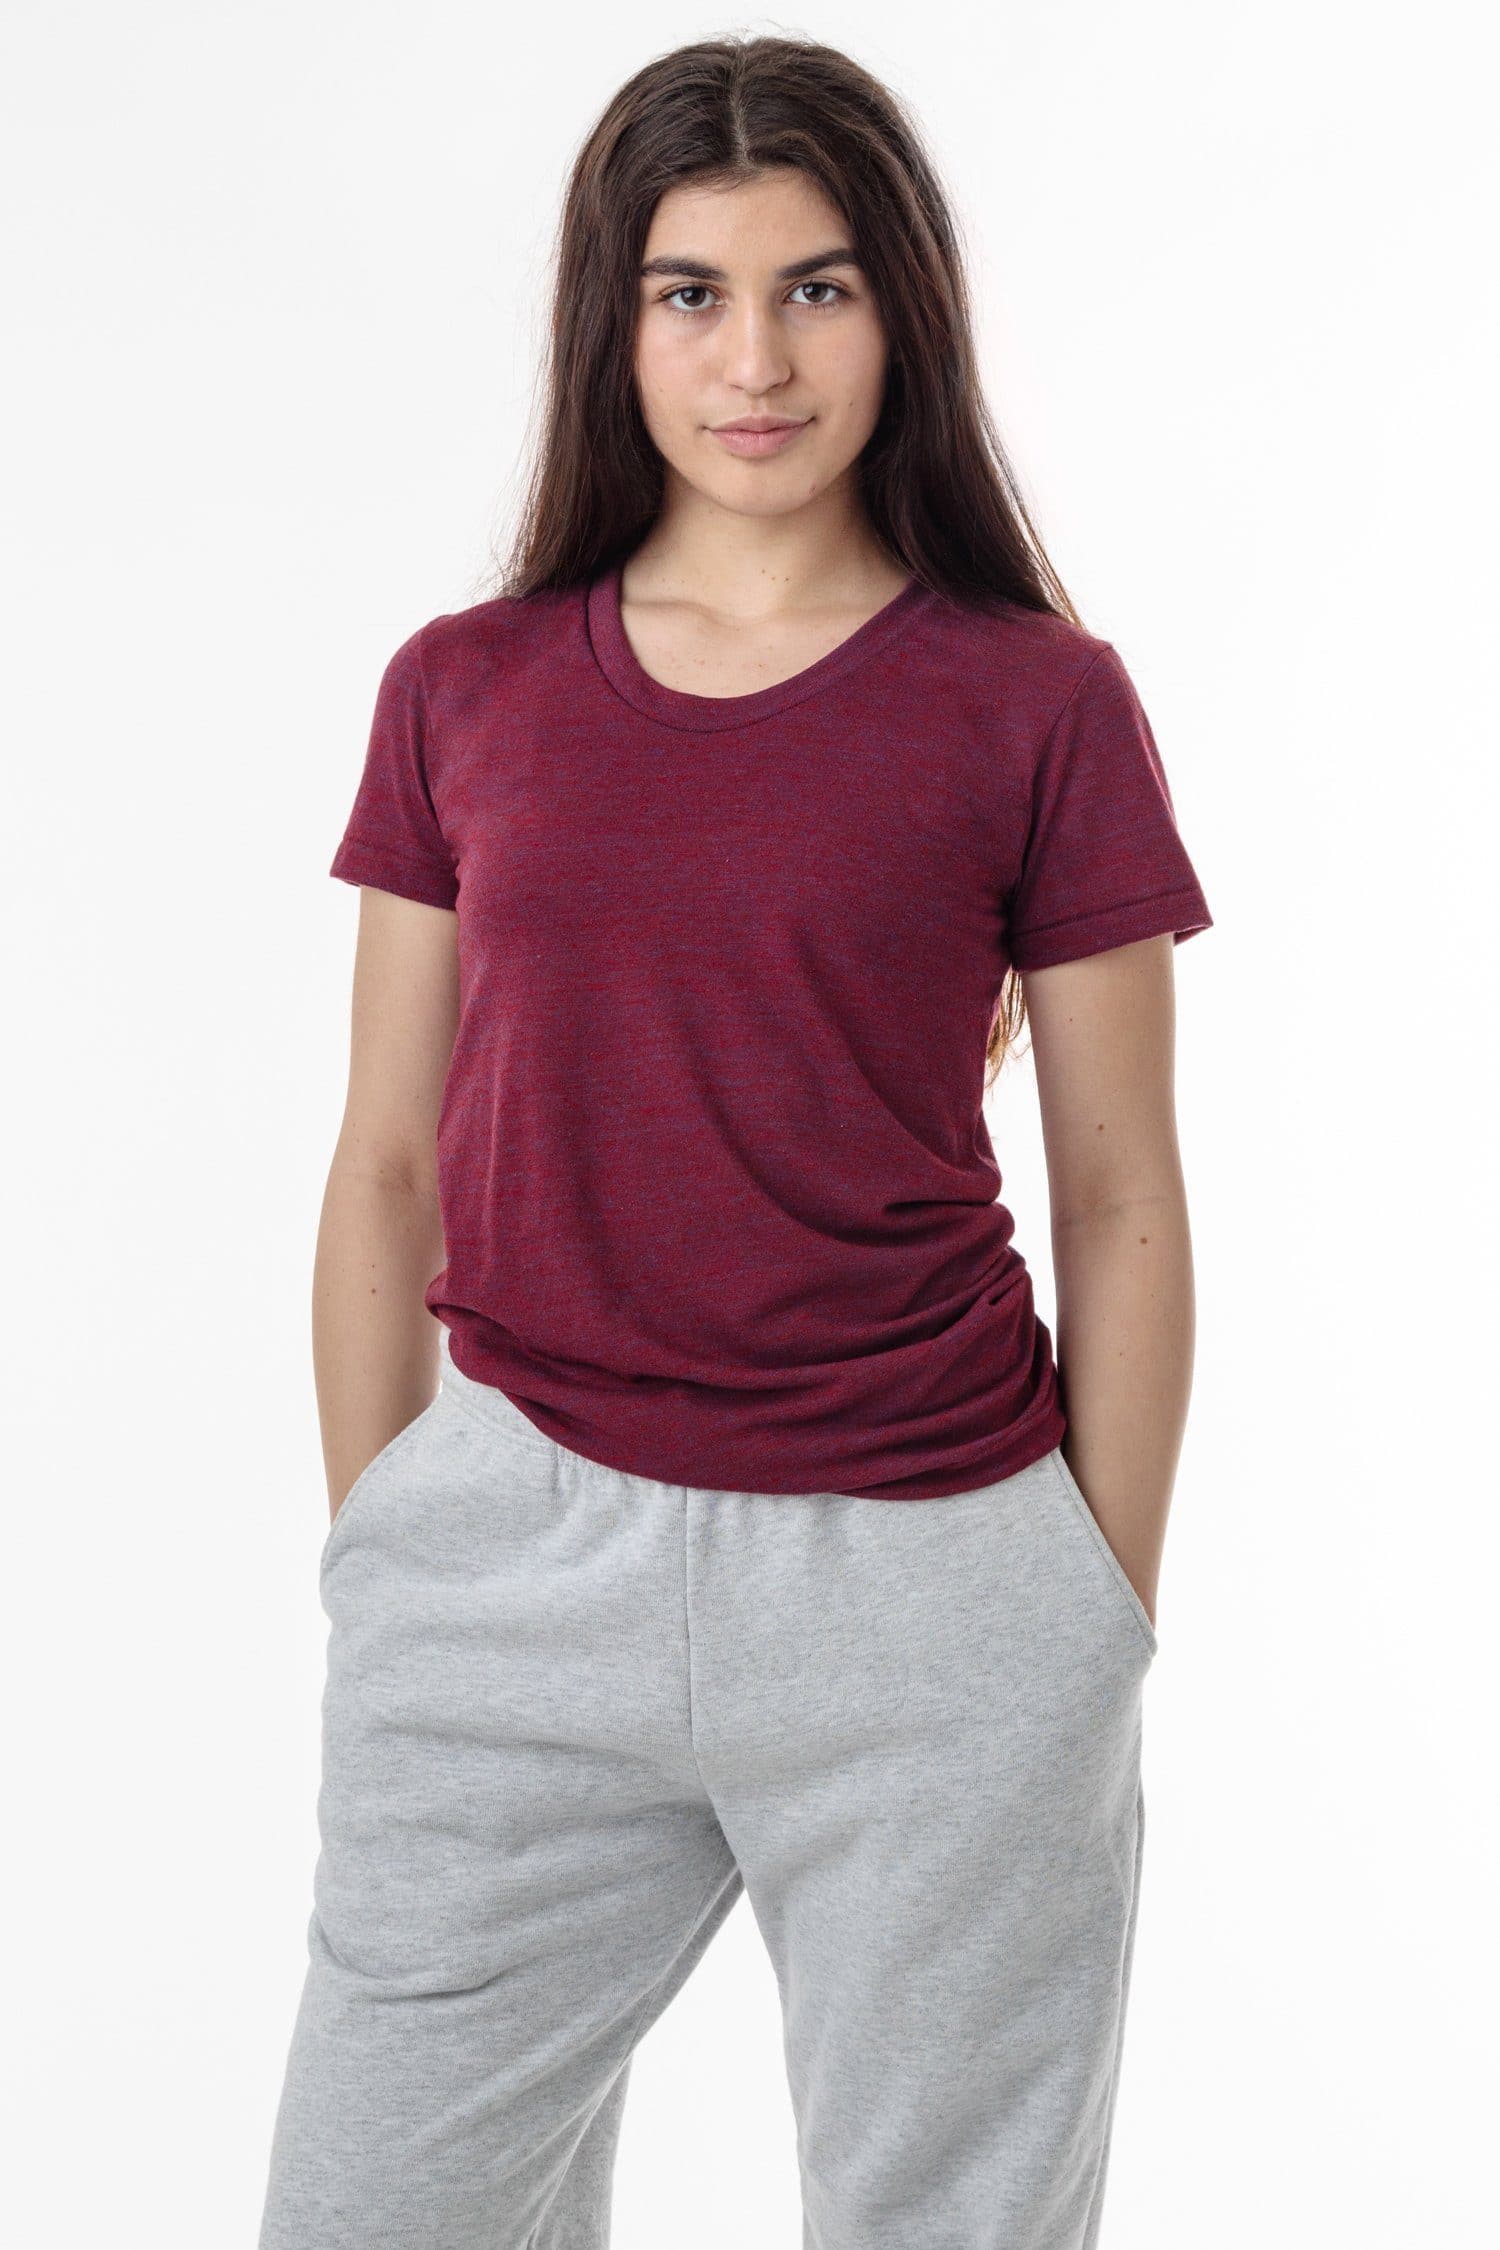 Women’s Teal- Lantic Performance Fit Tri-Blend T-Shirt